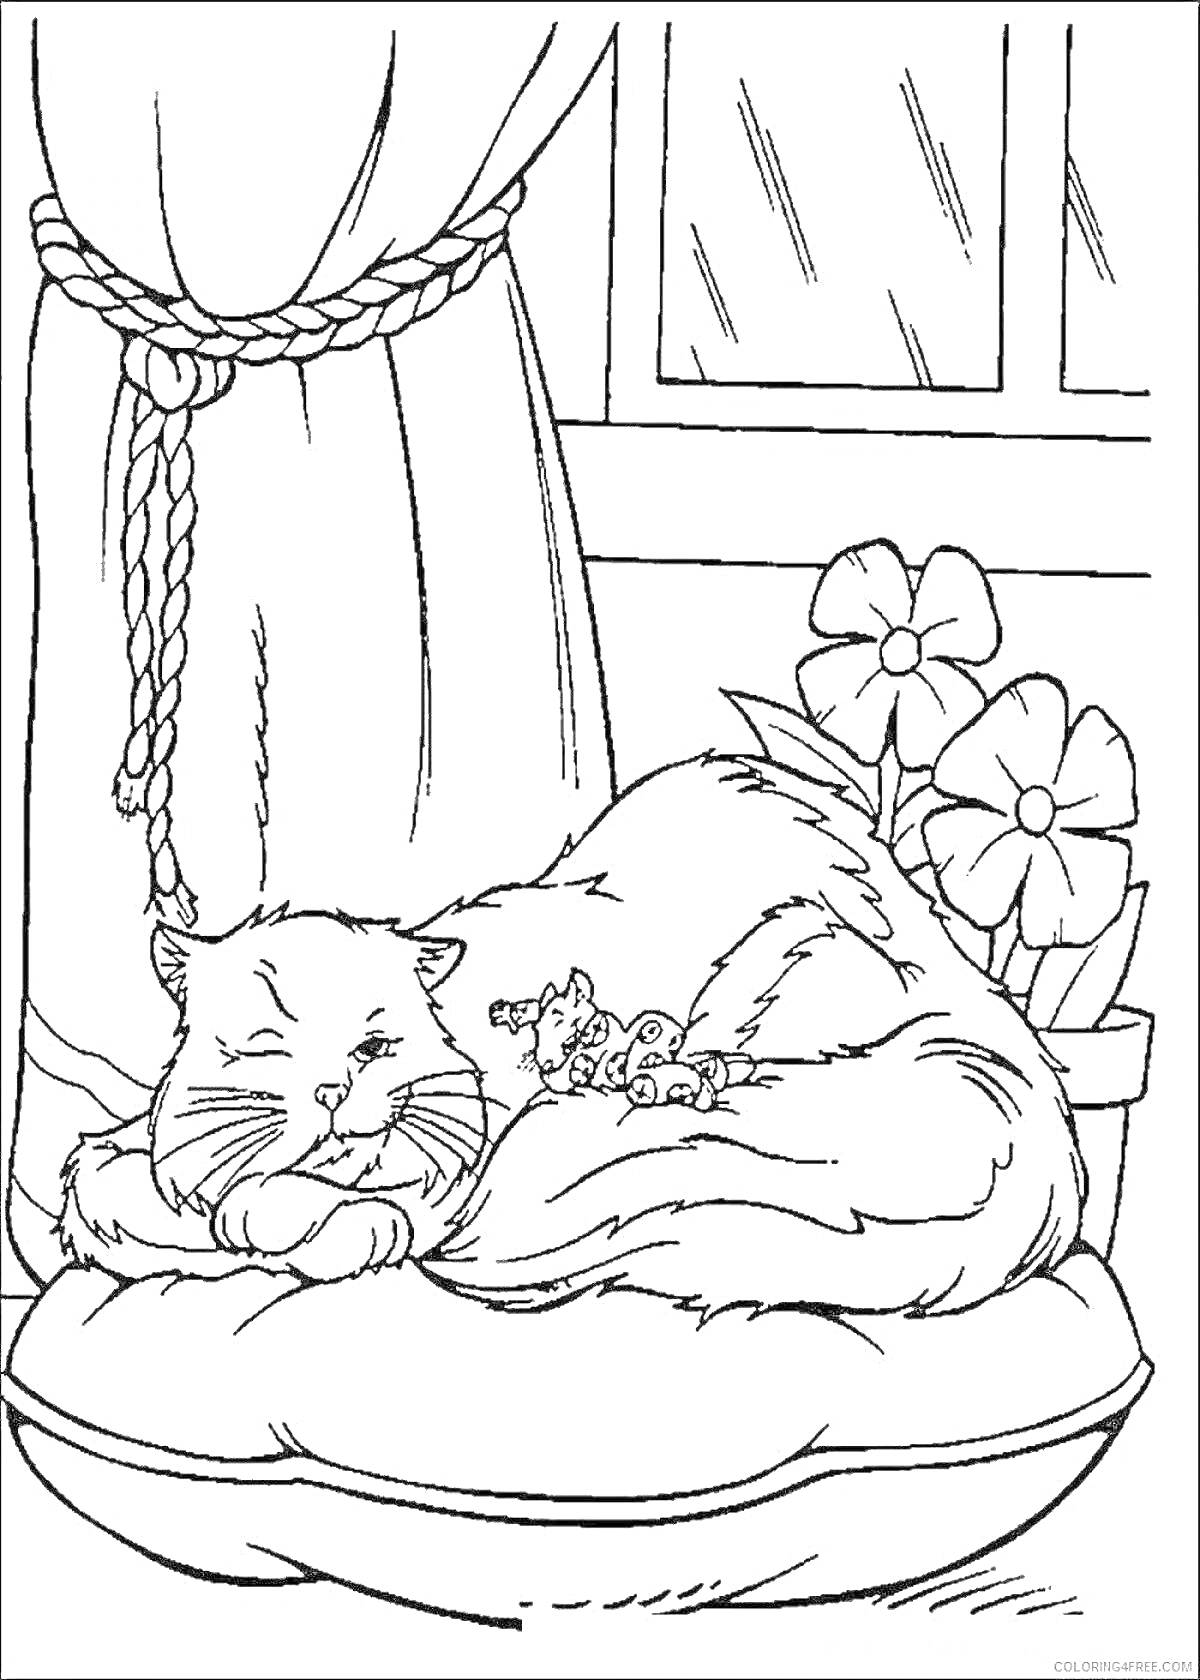 Кошка спит на подушке, окно с занавеской, цветы в вазоне